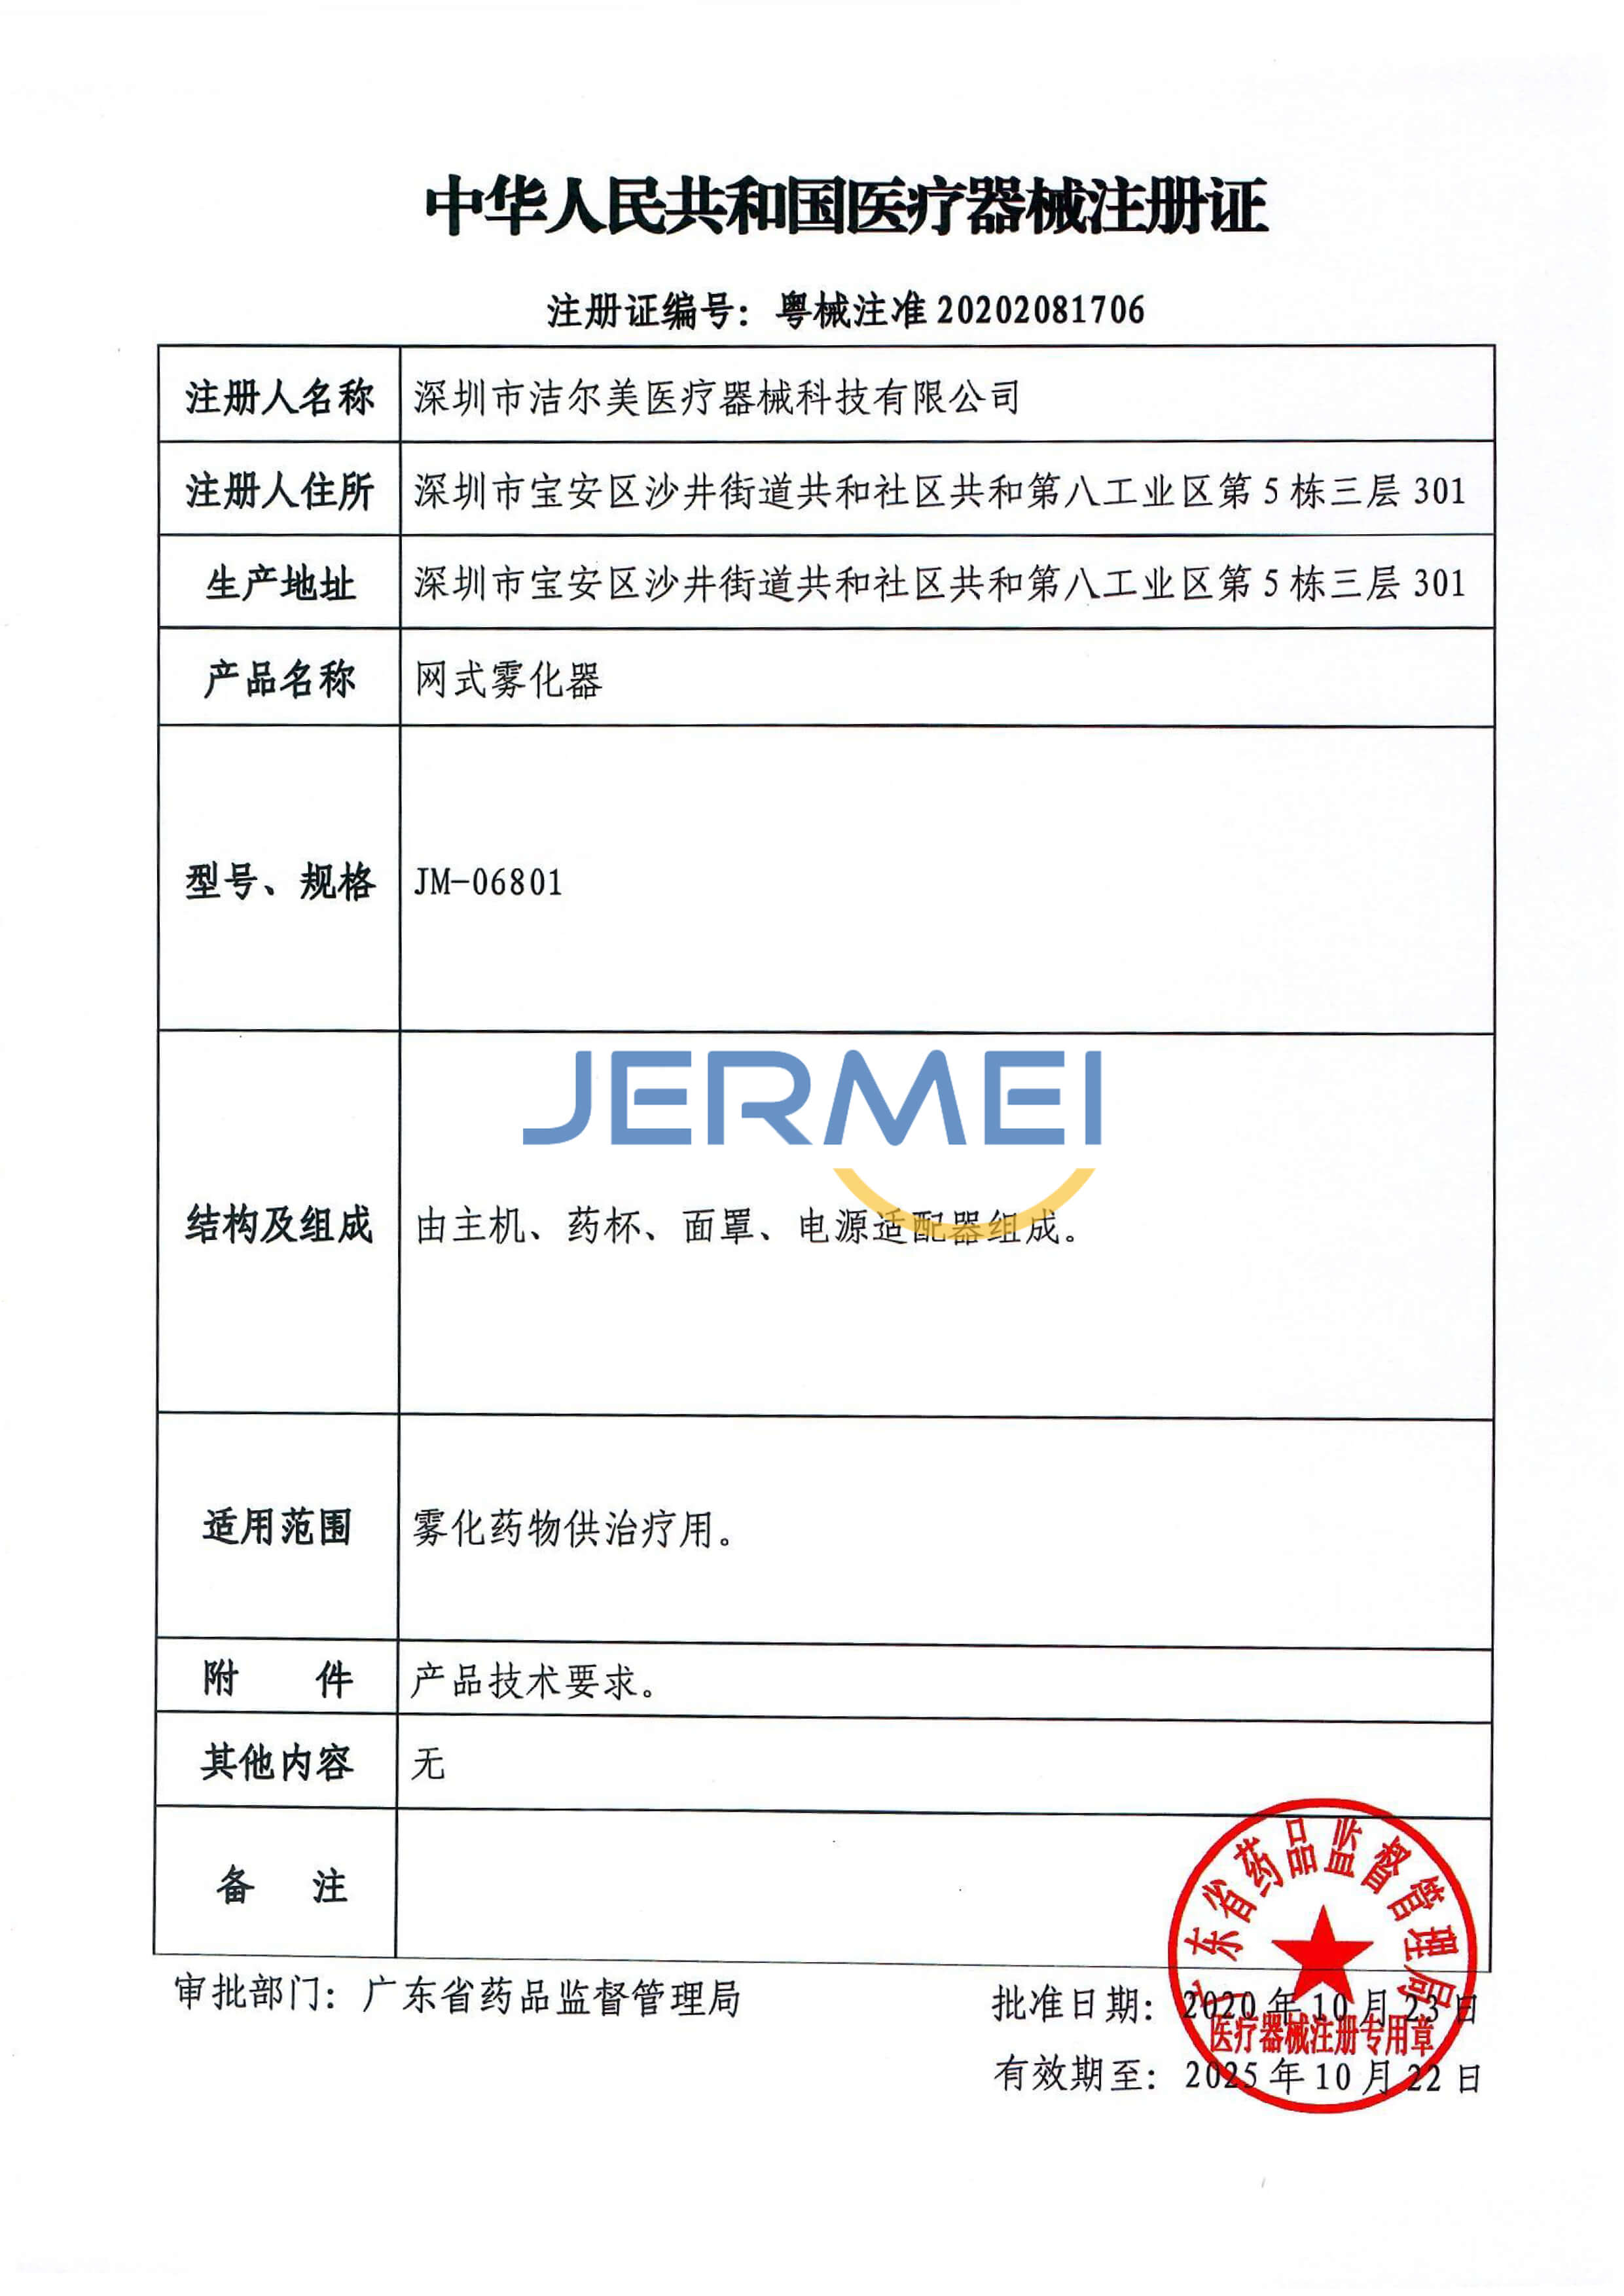 Atomizer certificate (3)